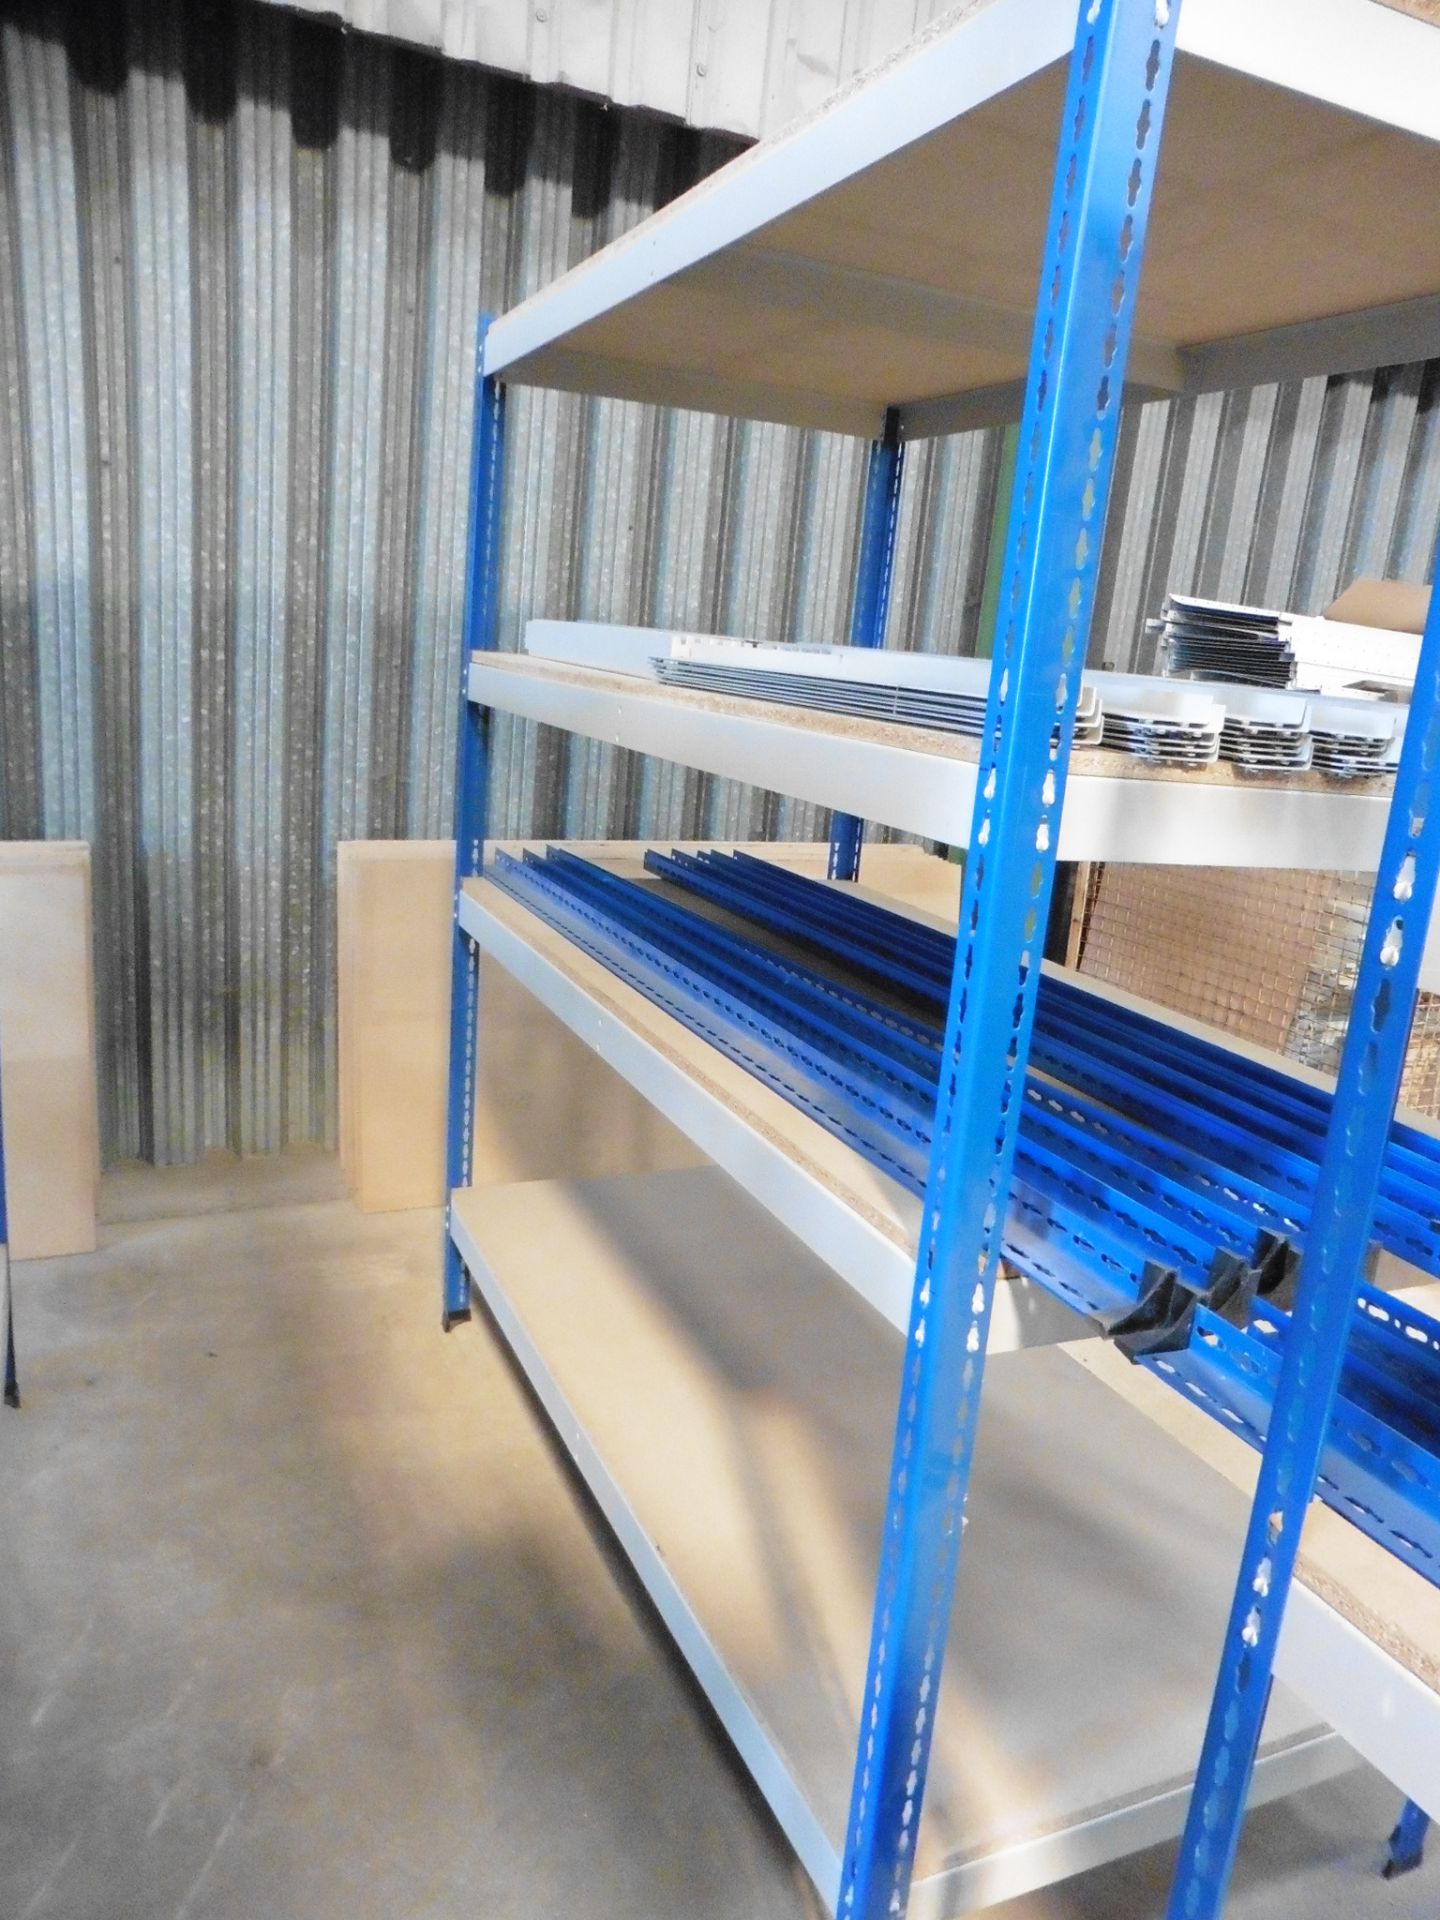 5 bays of blue and grey medium duty 4 shelf racks with chipboard shelves, each bay 1830 x 930 x